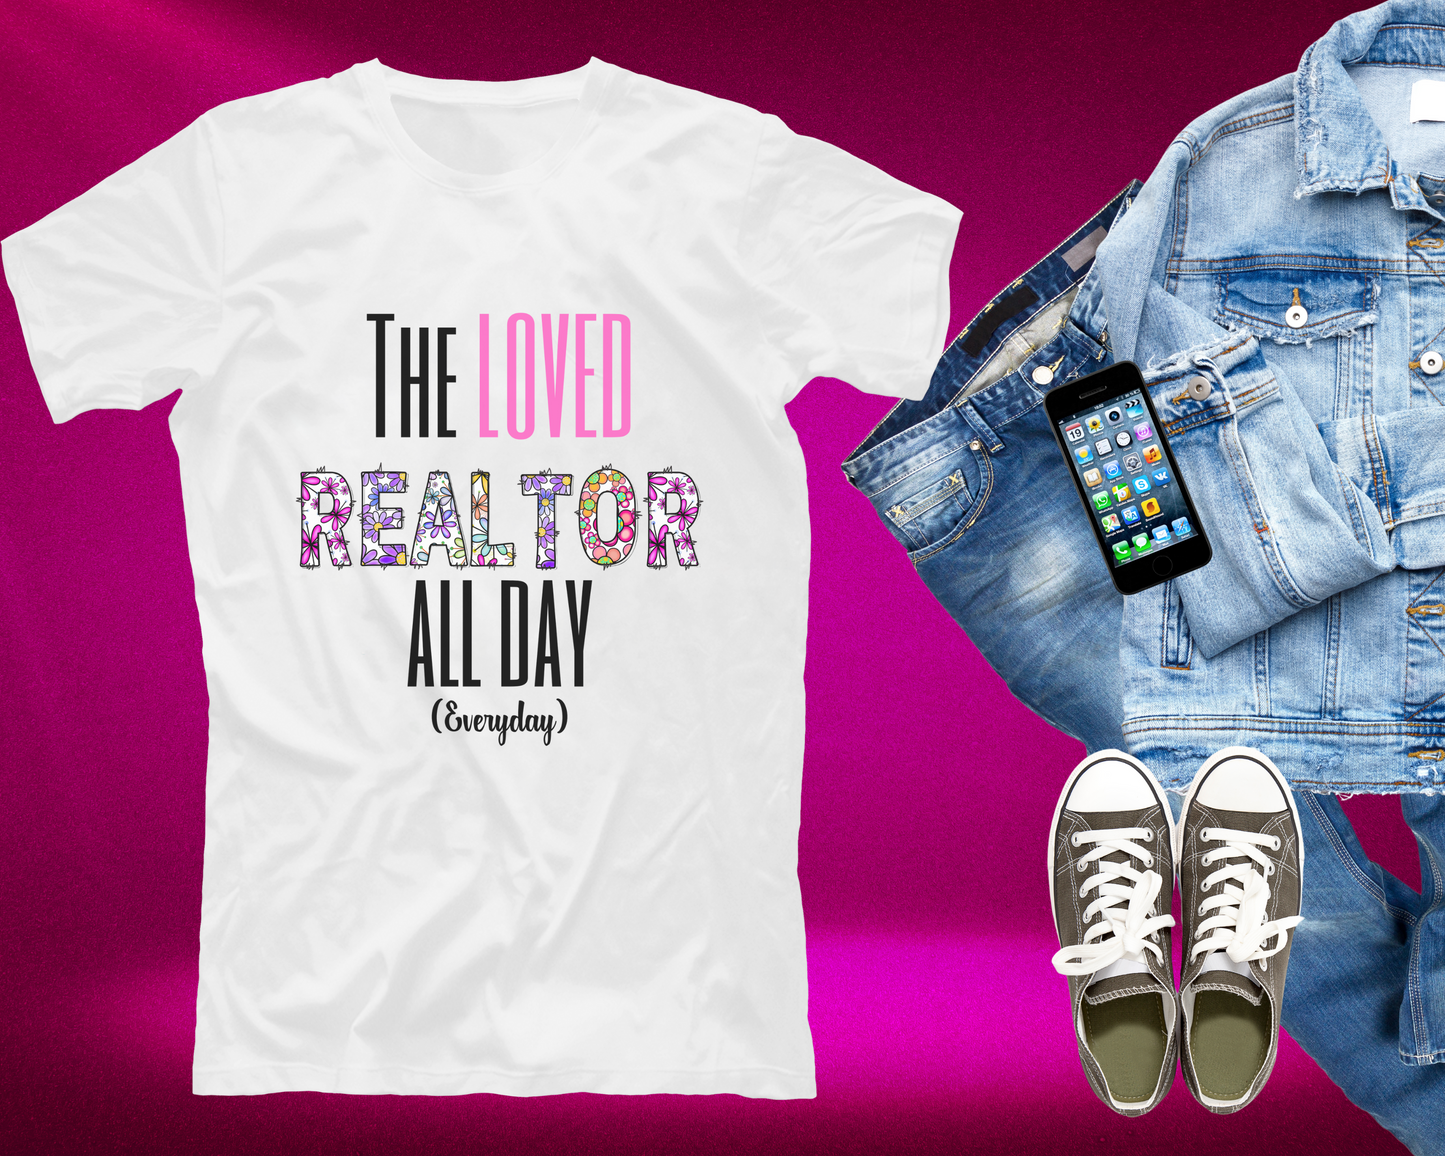 The Loved Realtor Valentine T-shirt (White)